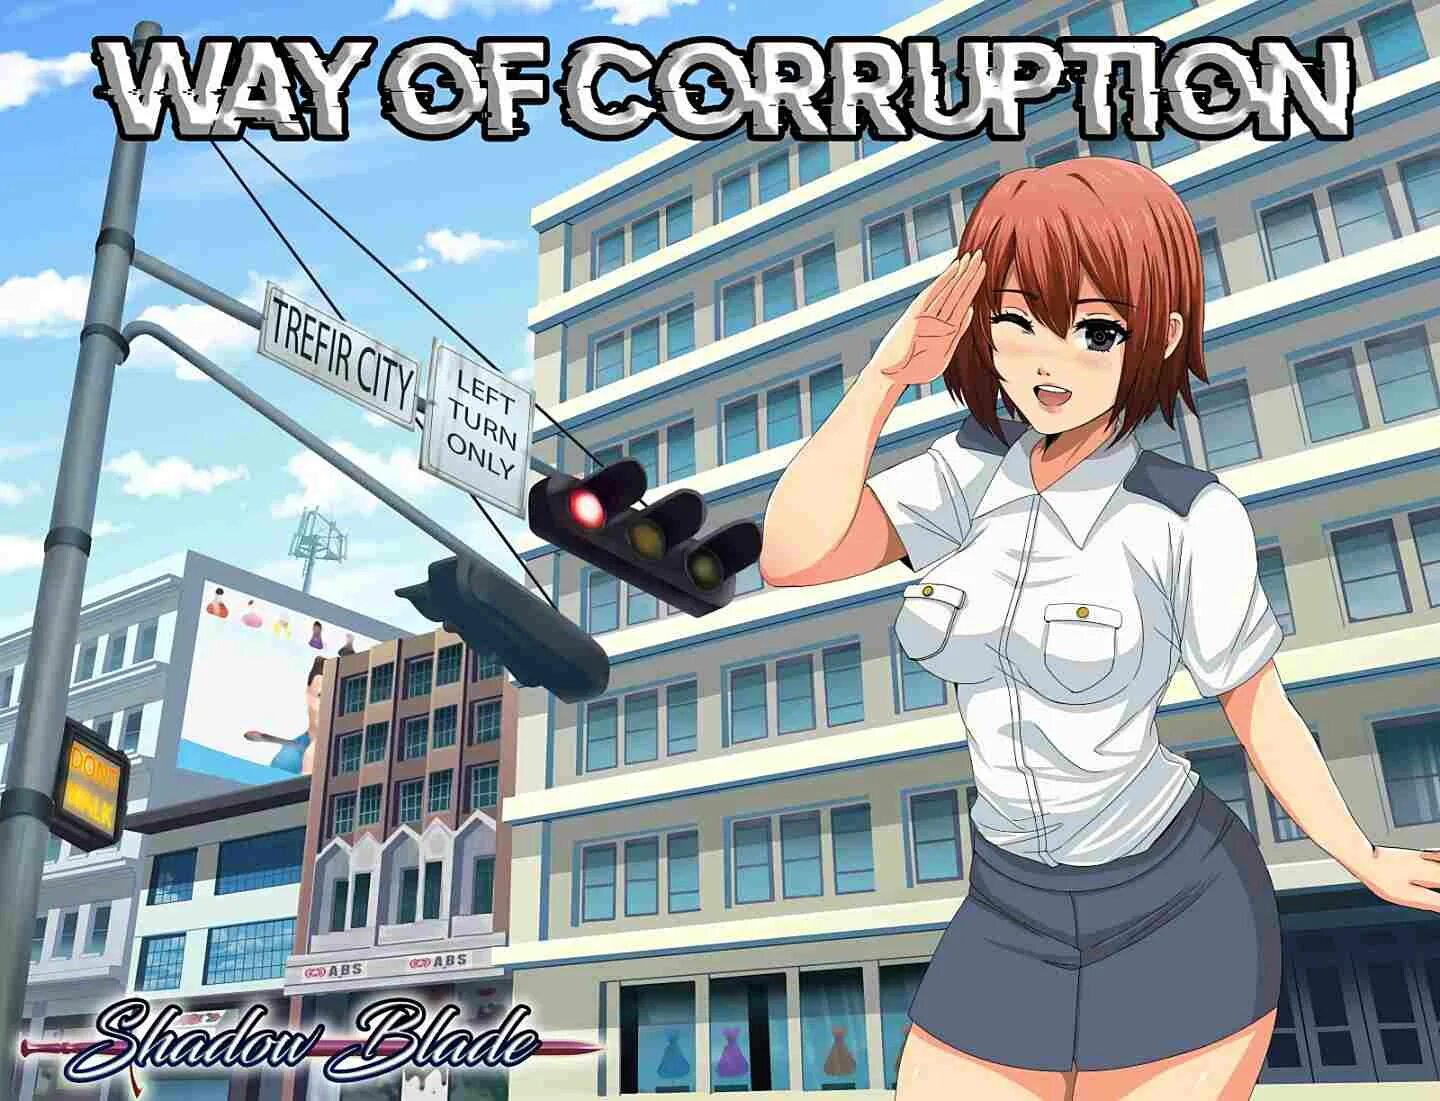 Corruption 10. Way of corruption. Corruption игра. Agency of corruption игра. H-game коррупция.